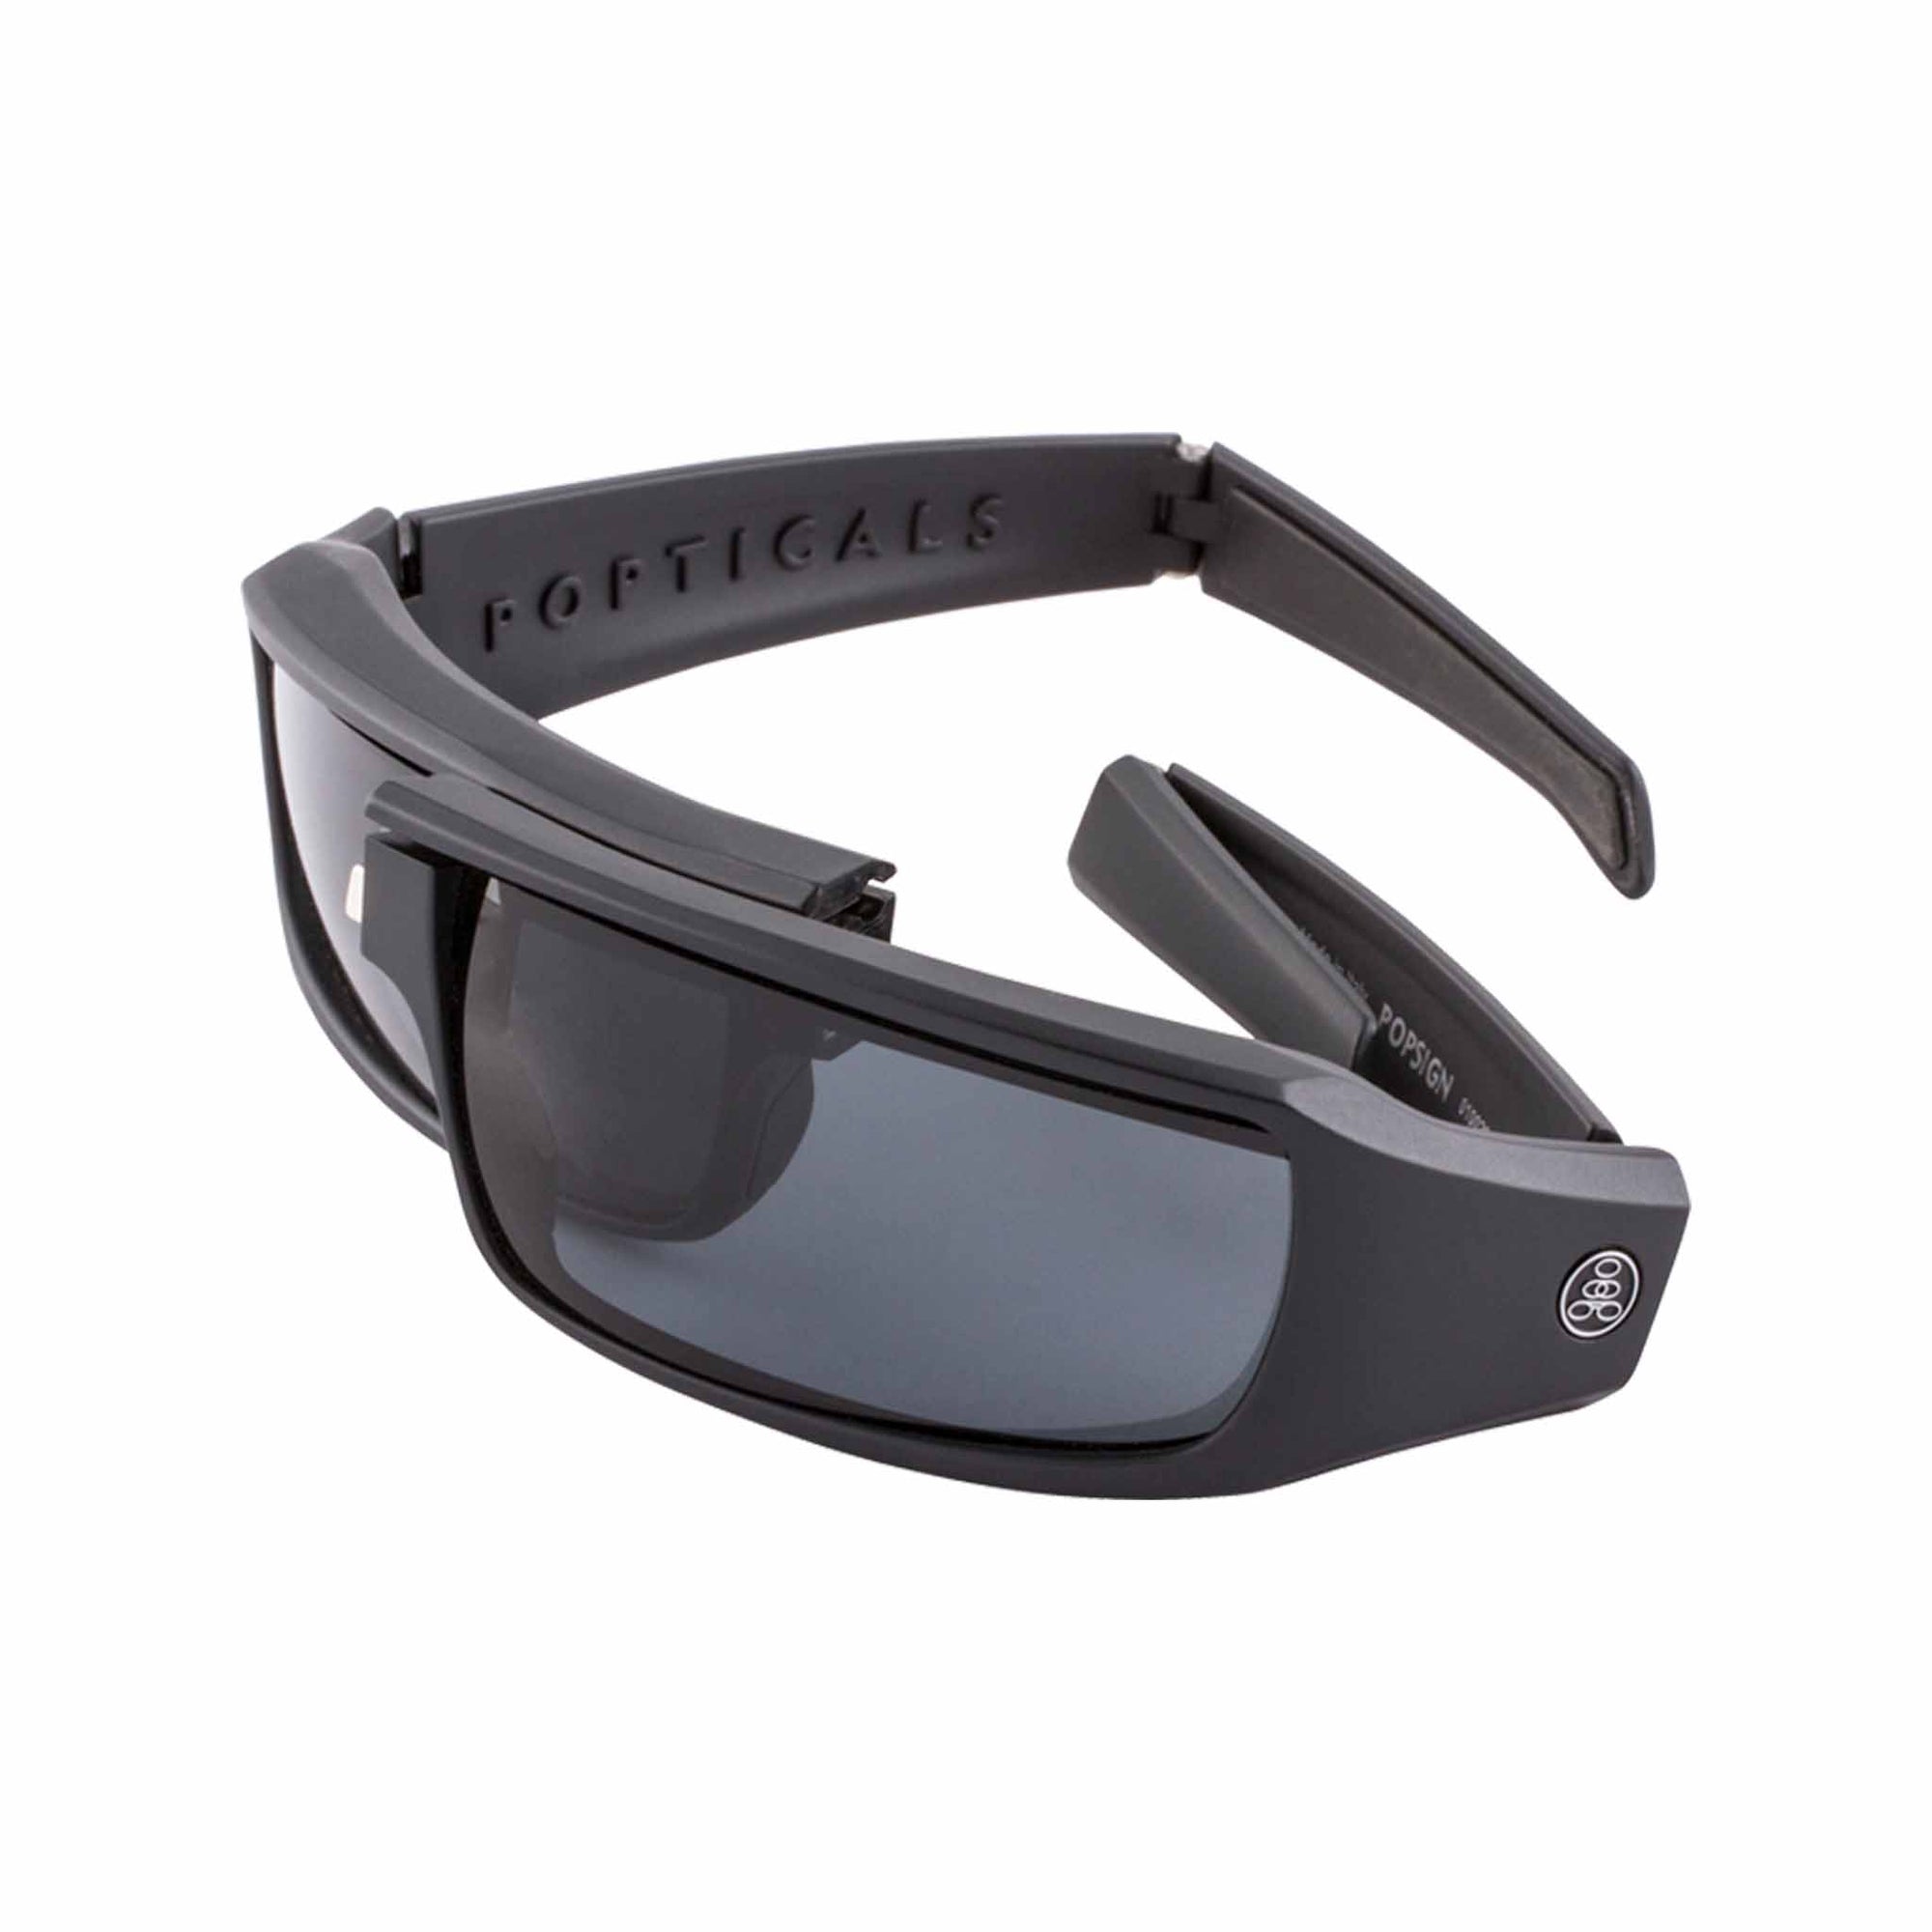 Popticals, Premium Compact Sunglasses, PopSign, 010020-BMGS, Standard Sunglasses, Matte Black Frame, Gray Lenses, Spider View